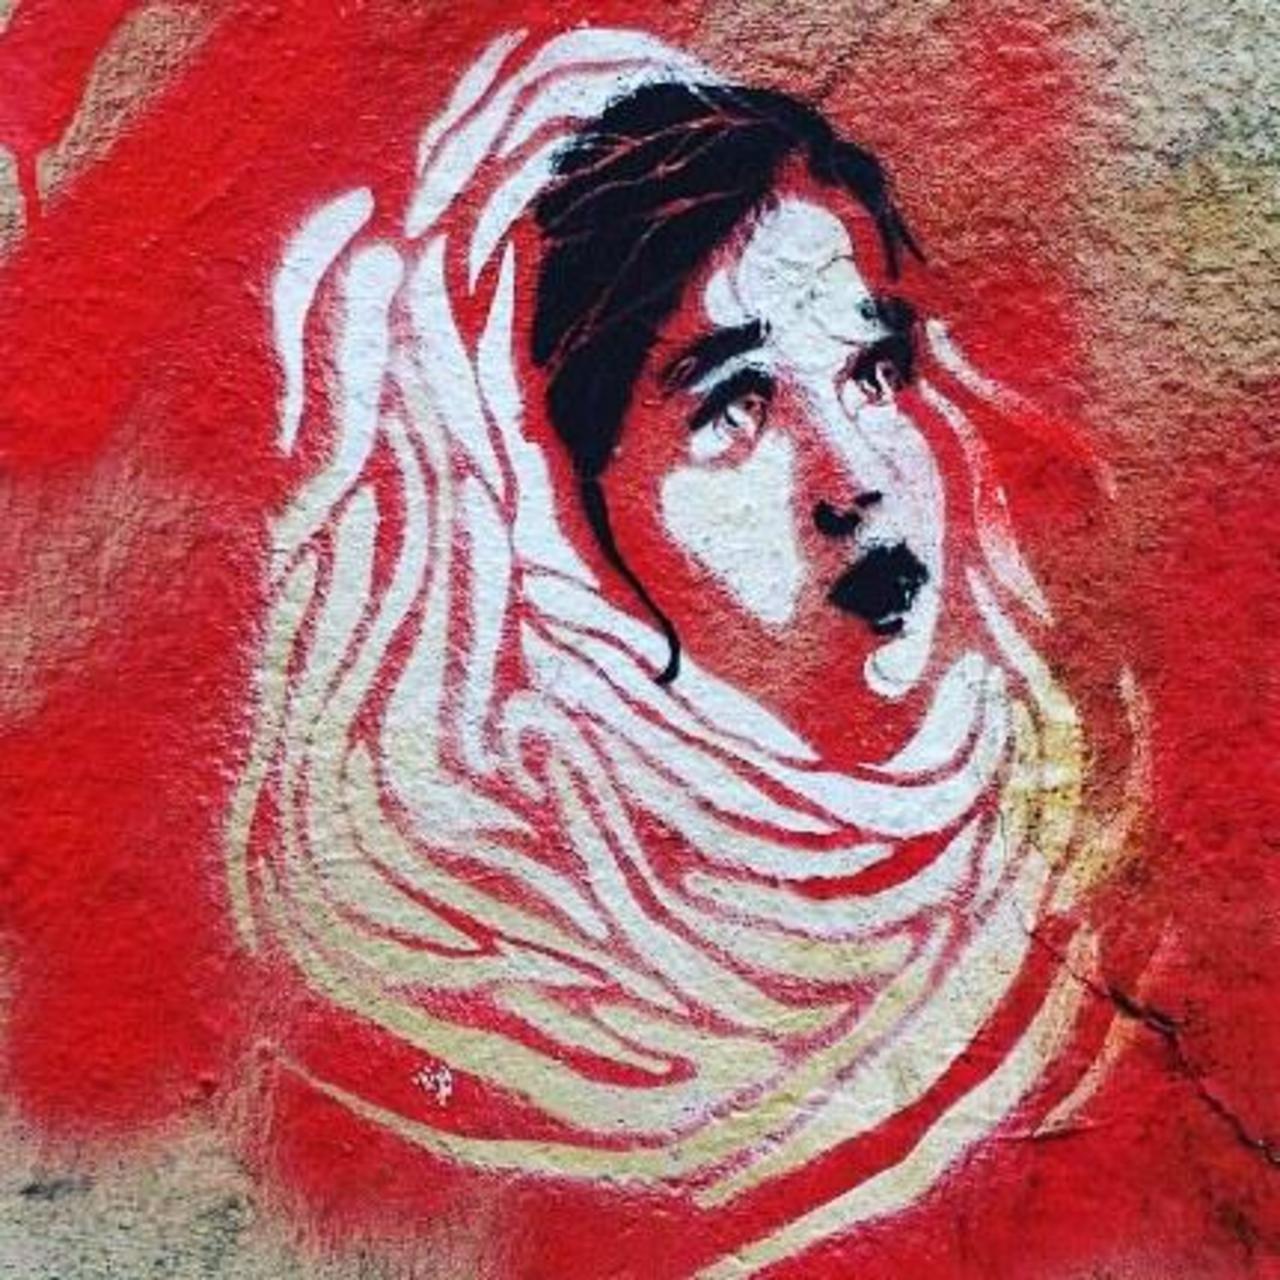 #Paris #graffiti photo by @senyorerre http://ift.tt/1G8ugkT #StreetArt http://t.co/XmpQVGcGM1